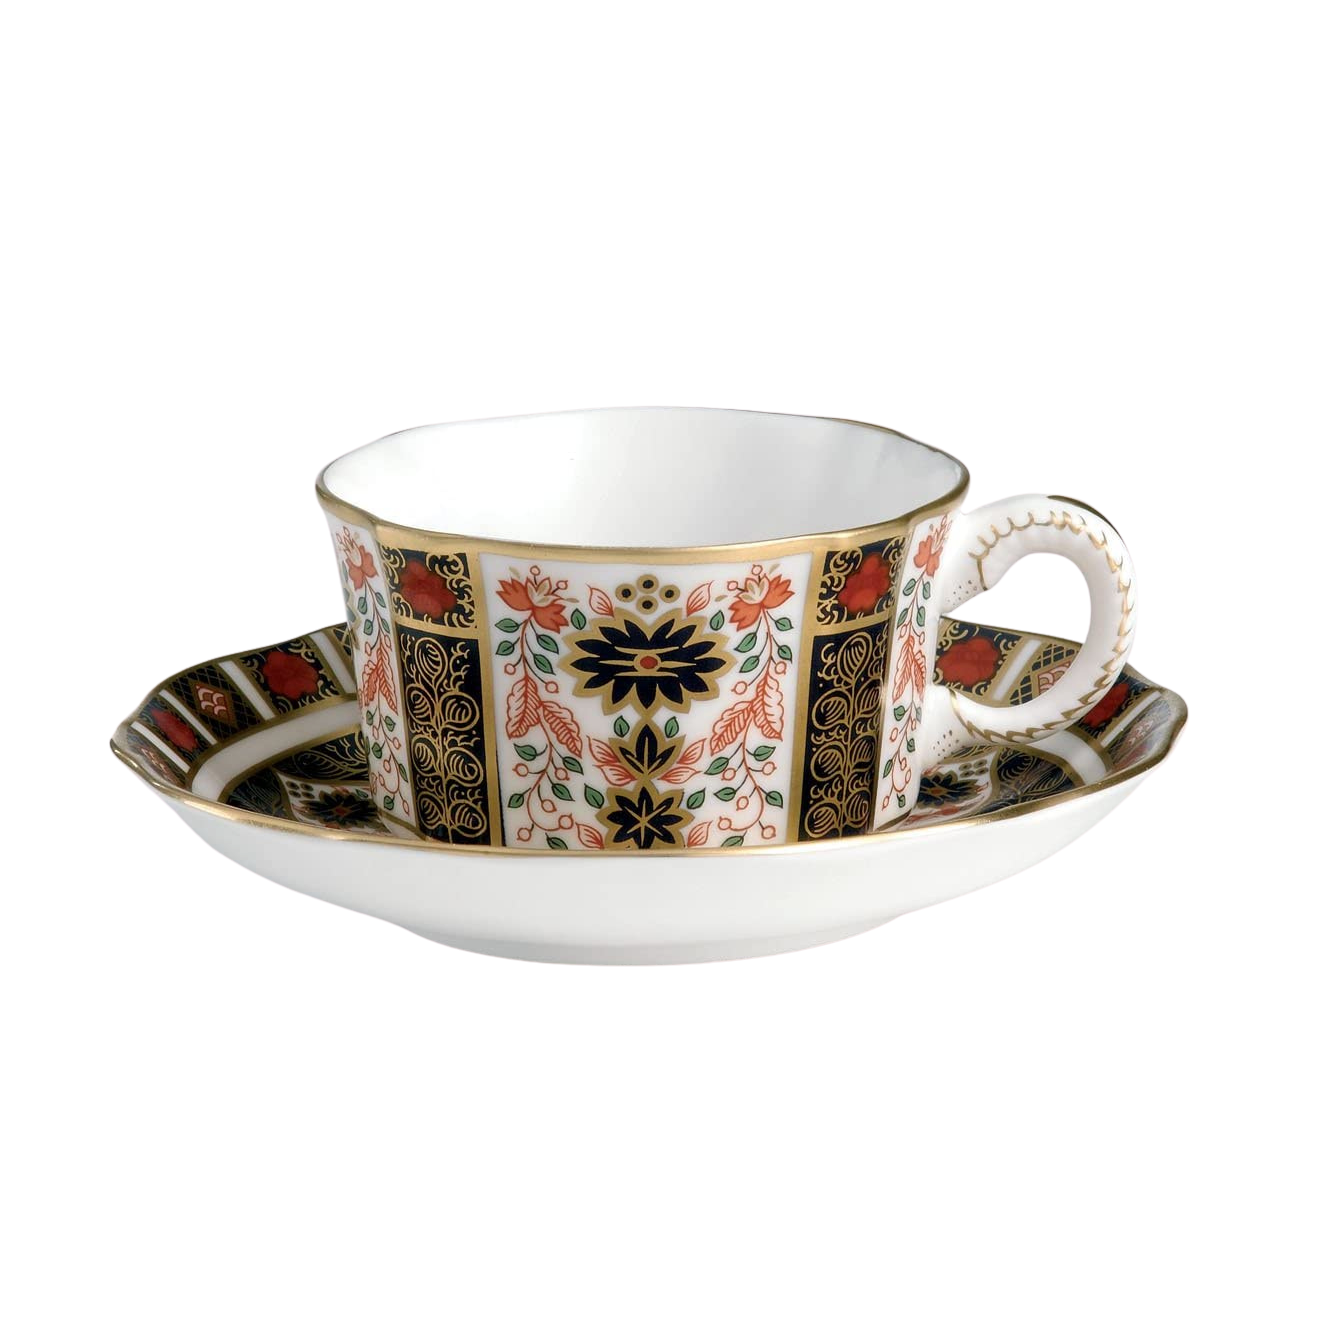 Old Imari Elizabeth - Teacup & Saucer (Royal Crown Derby) - Gallery Gifts Online 